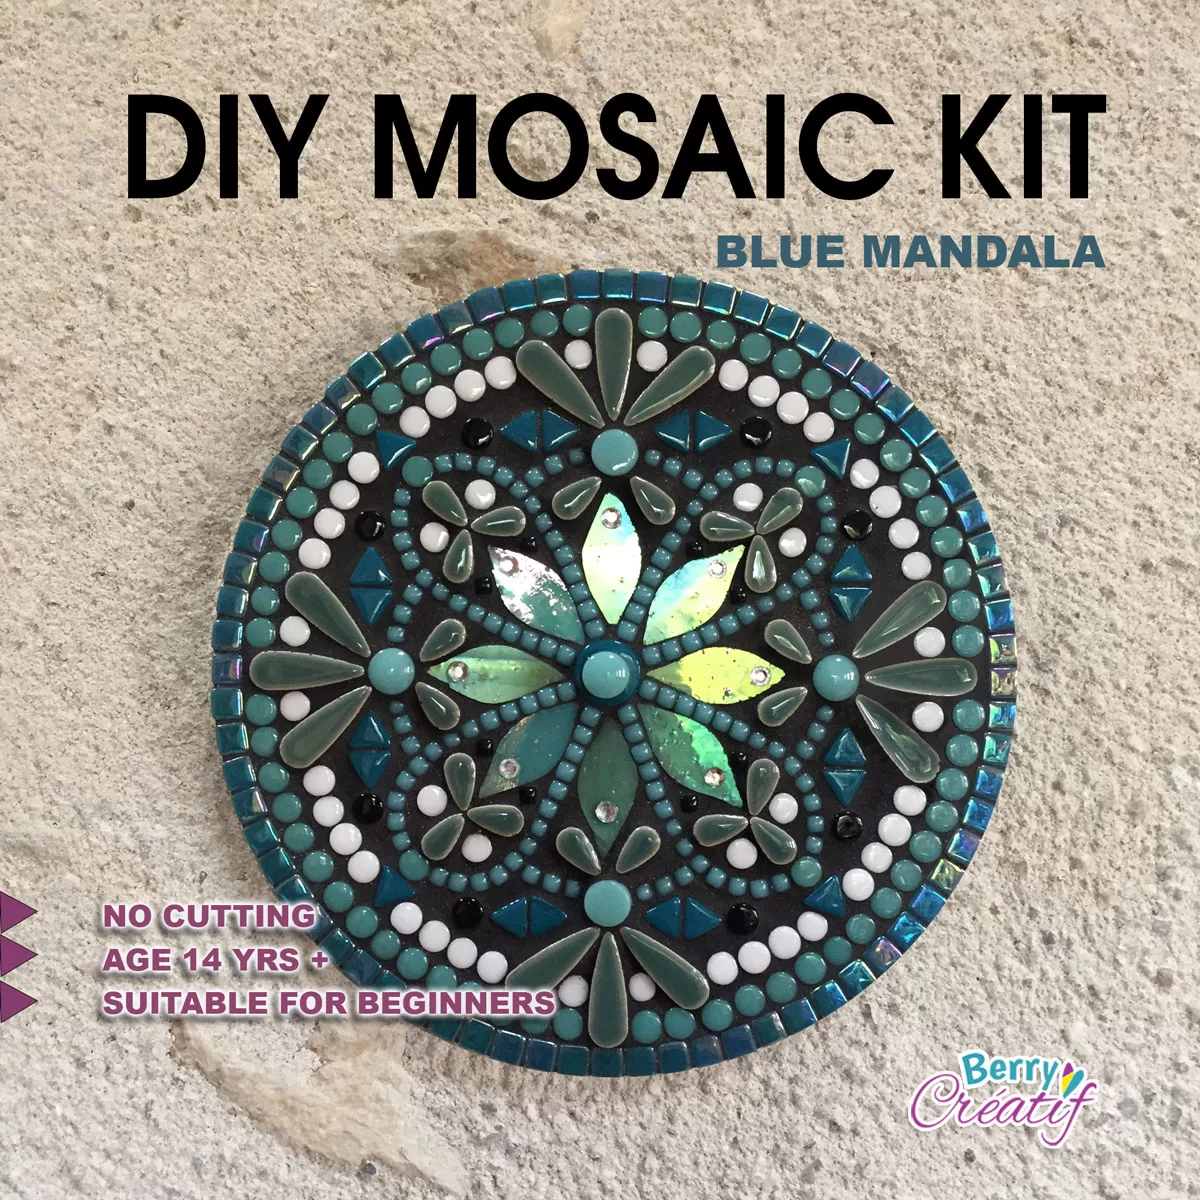 Mosaic Kit for adults  Blue Mandala - Berry Créatif Mosaics